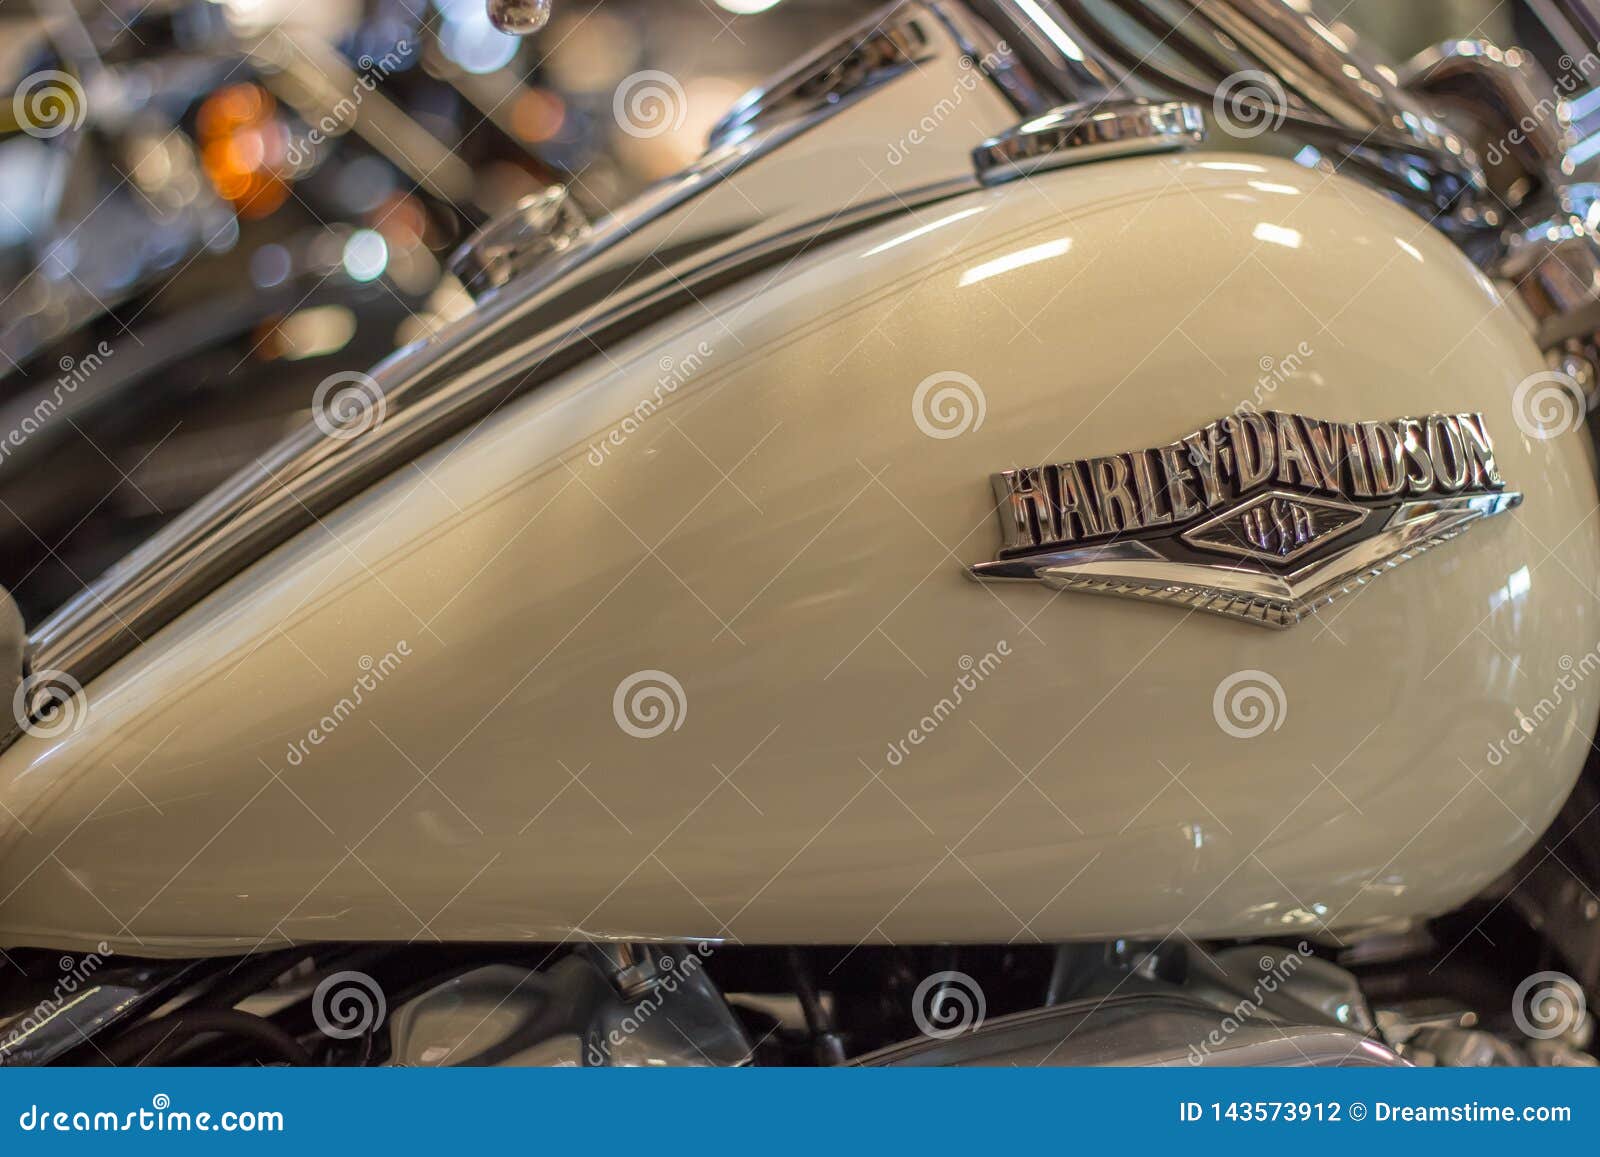 Harley Davidson Road King Custom Model Editorial Photography Image Of Power Motorbike 143573912